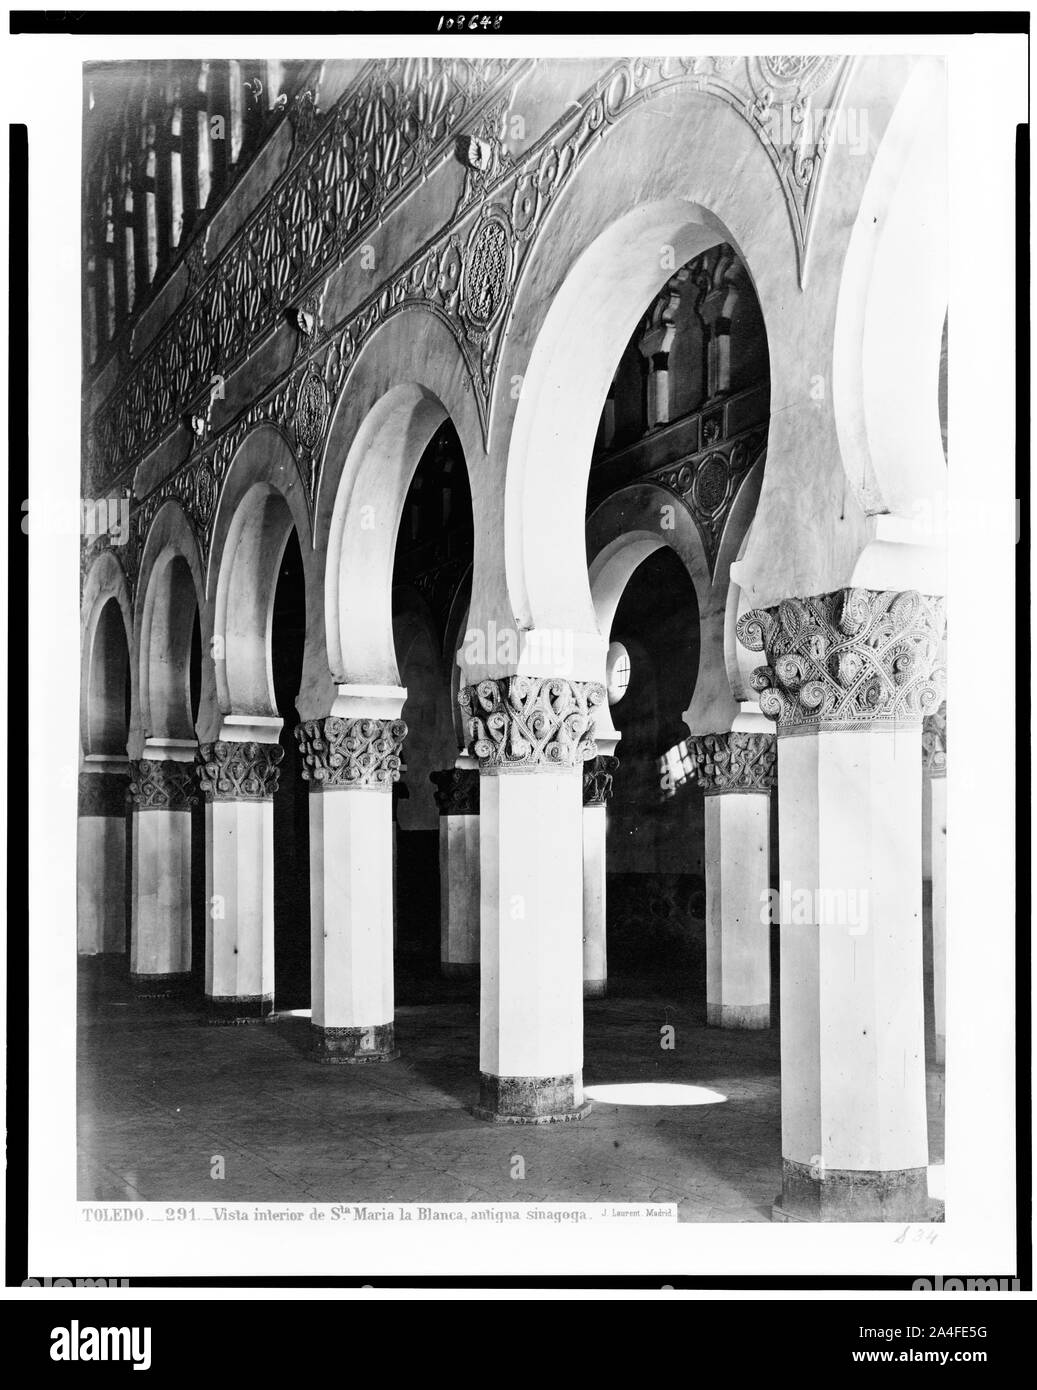 Toledo. Vista interior de Sta. Maria la Blanca, Antigua sinagoga/J. Laurent. Madrid. Stockfoto